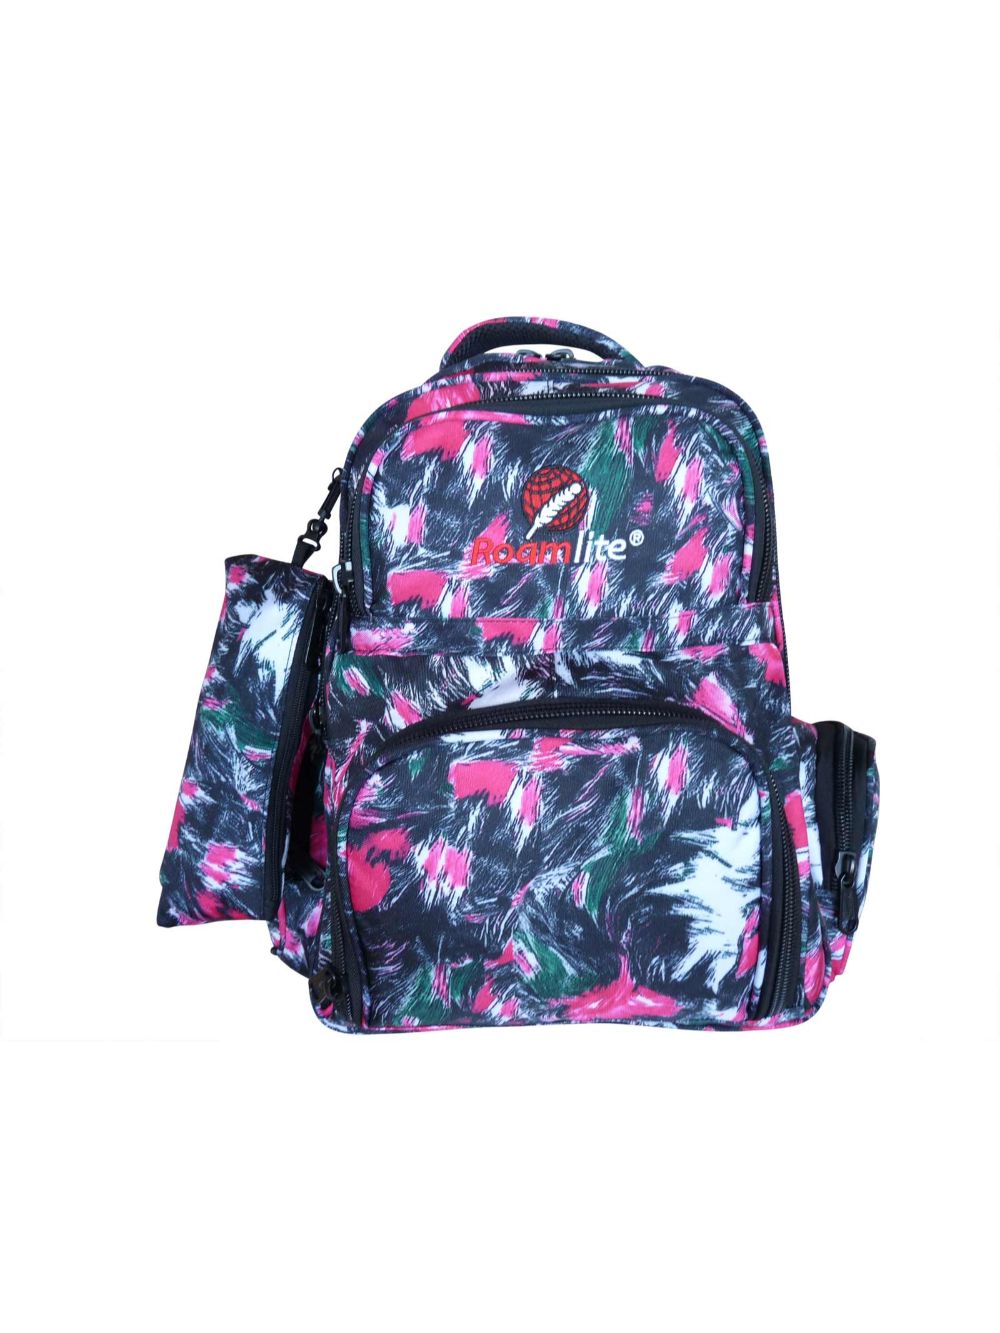 Roamlite Childrens Backpack Pink Paint pattern RL839 front